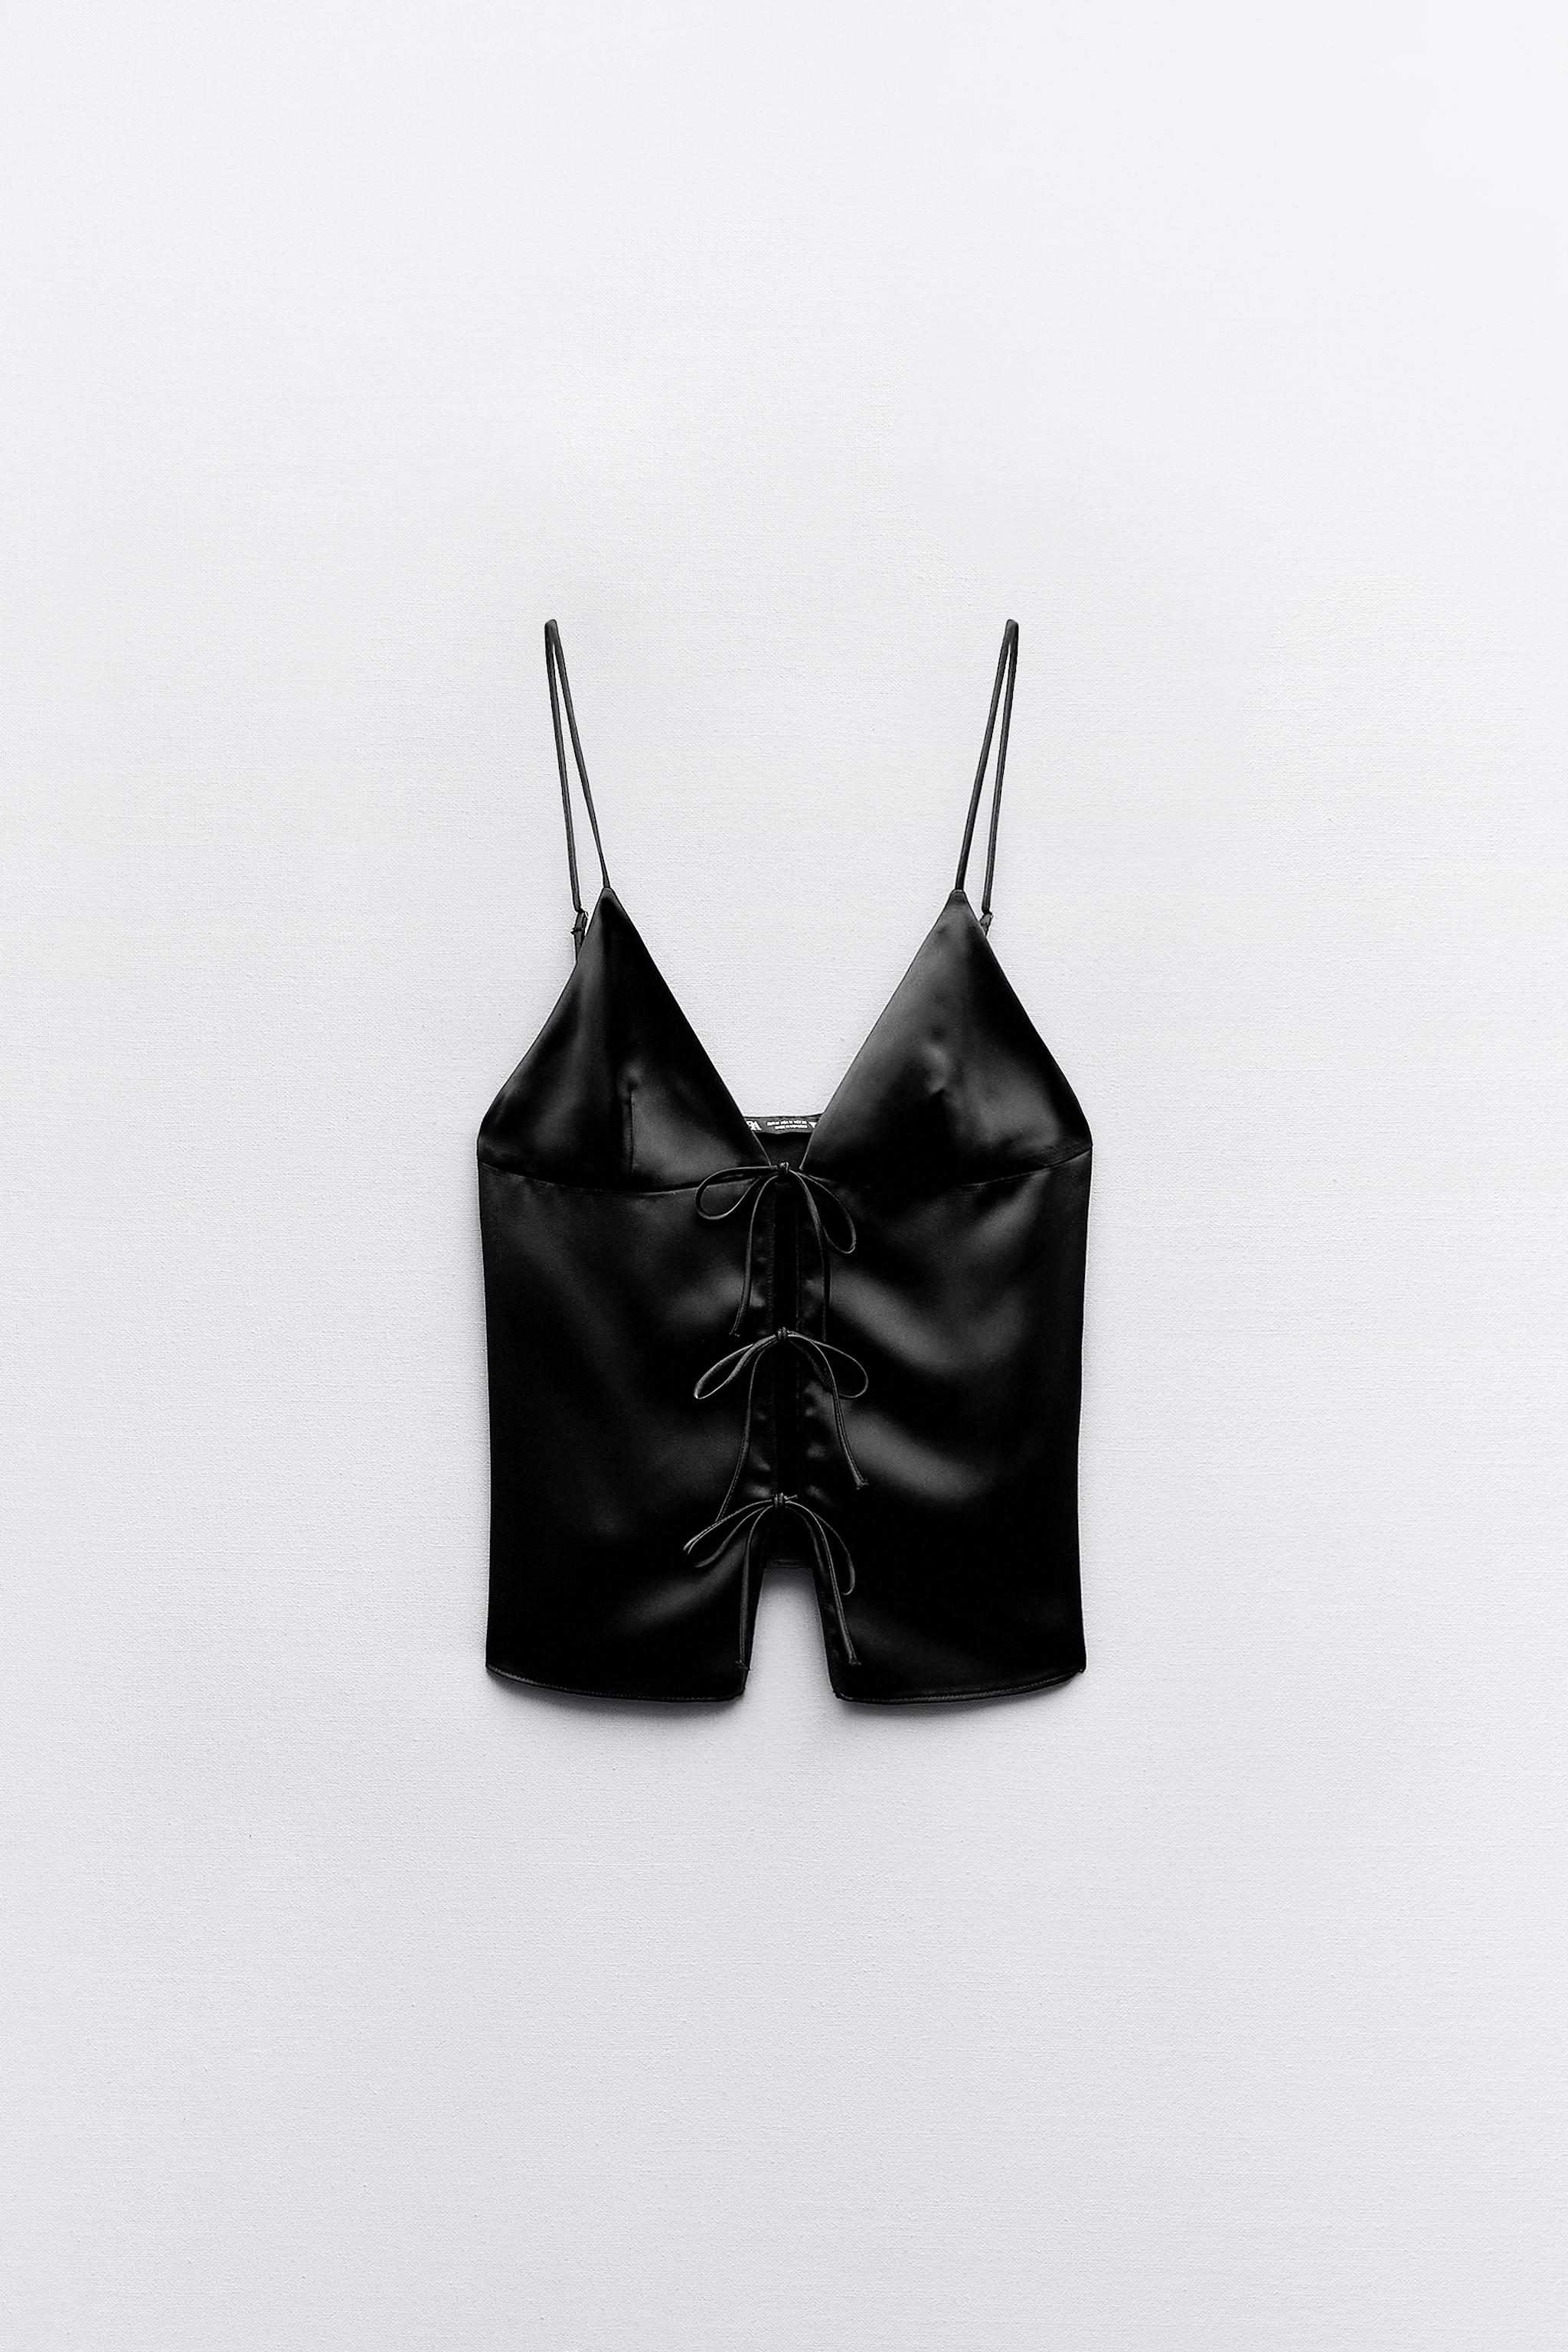 Zara Black Satin Smocked Back Crop Top Bralette Style Size XS